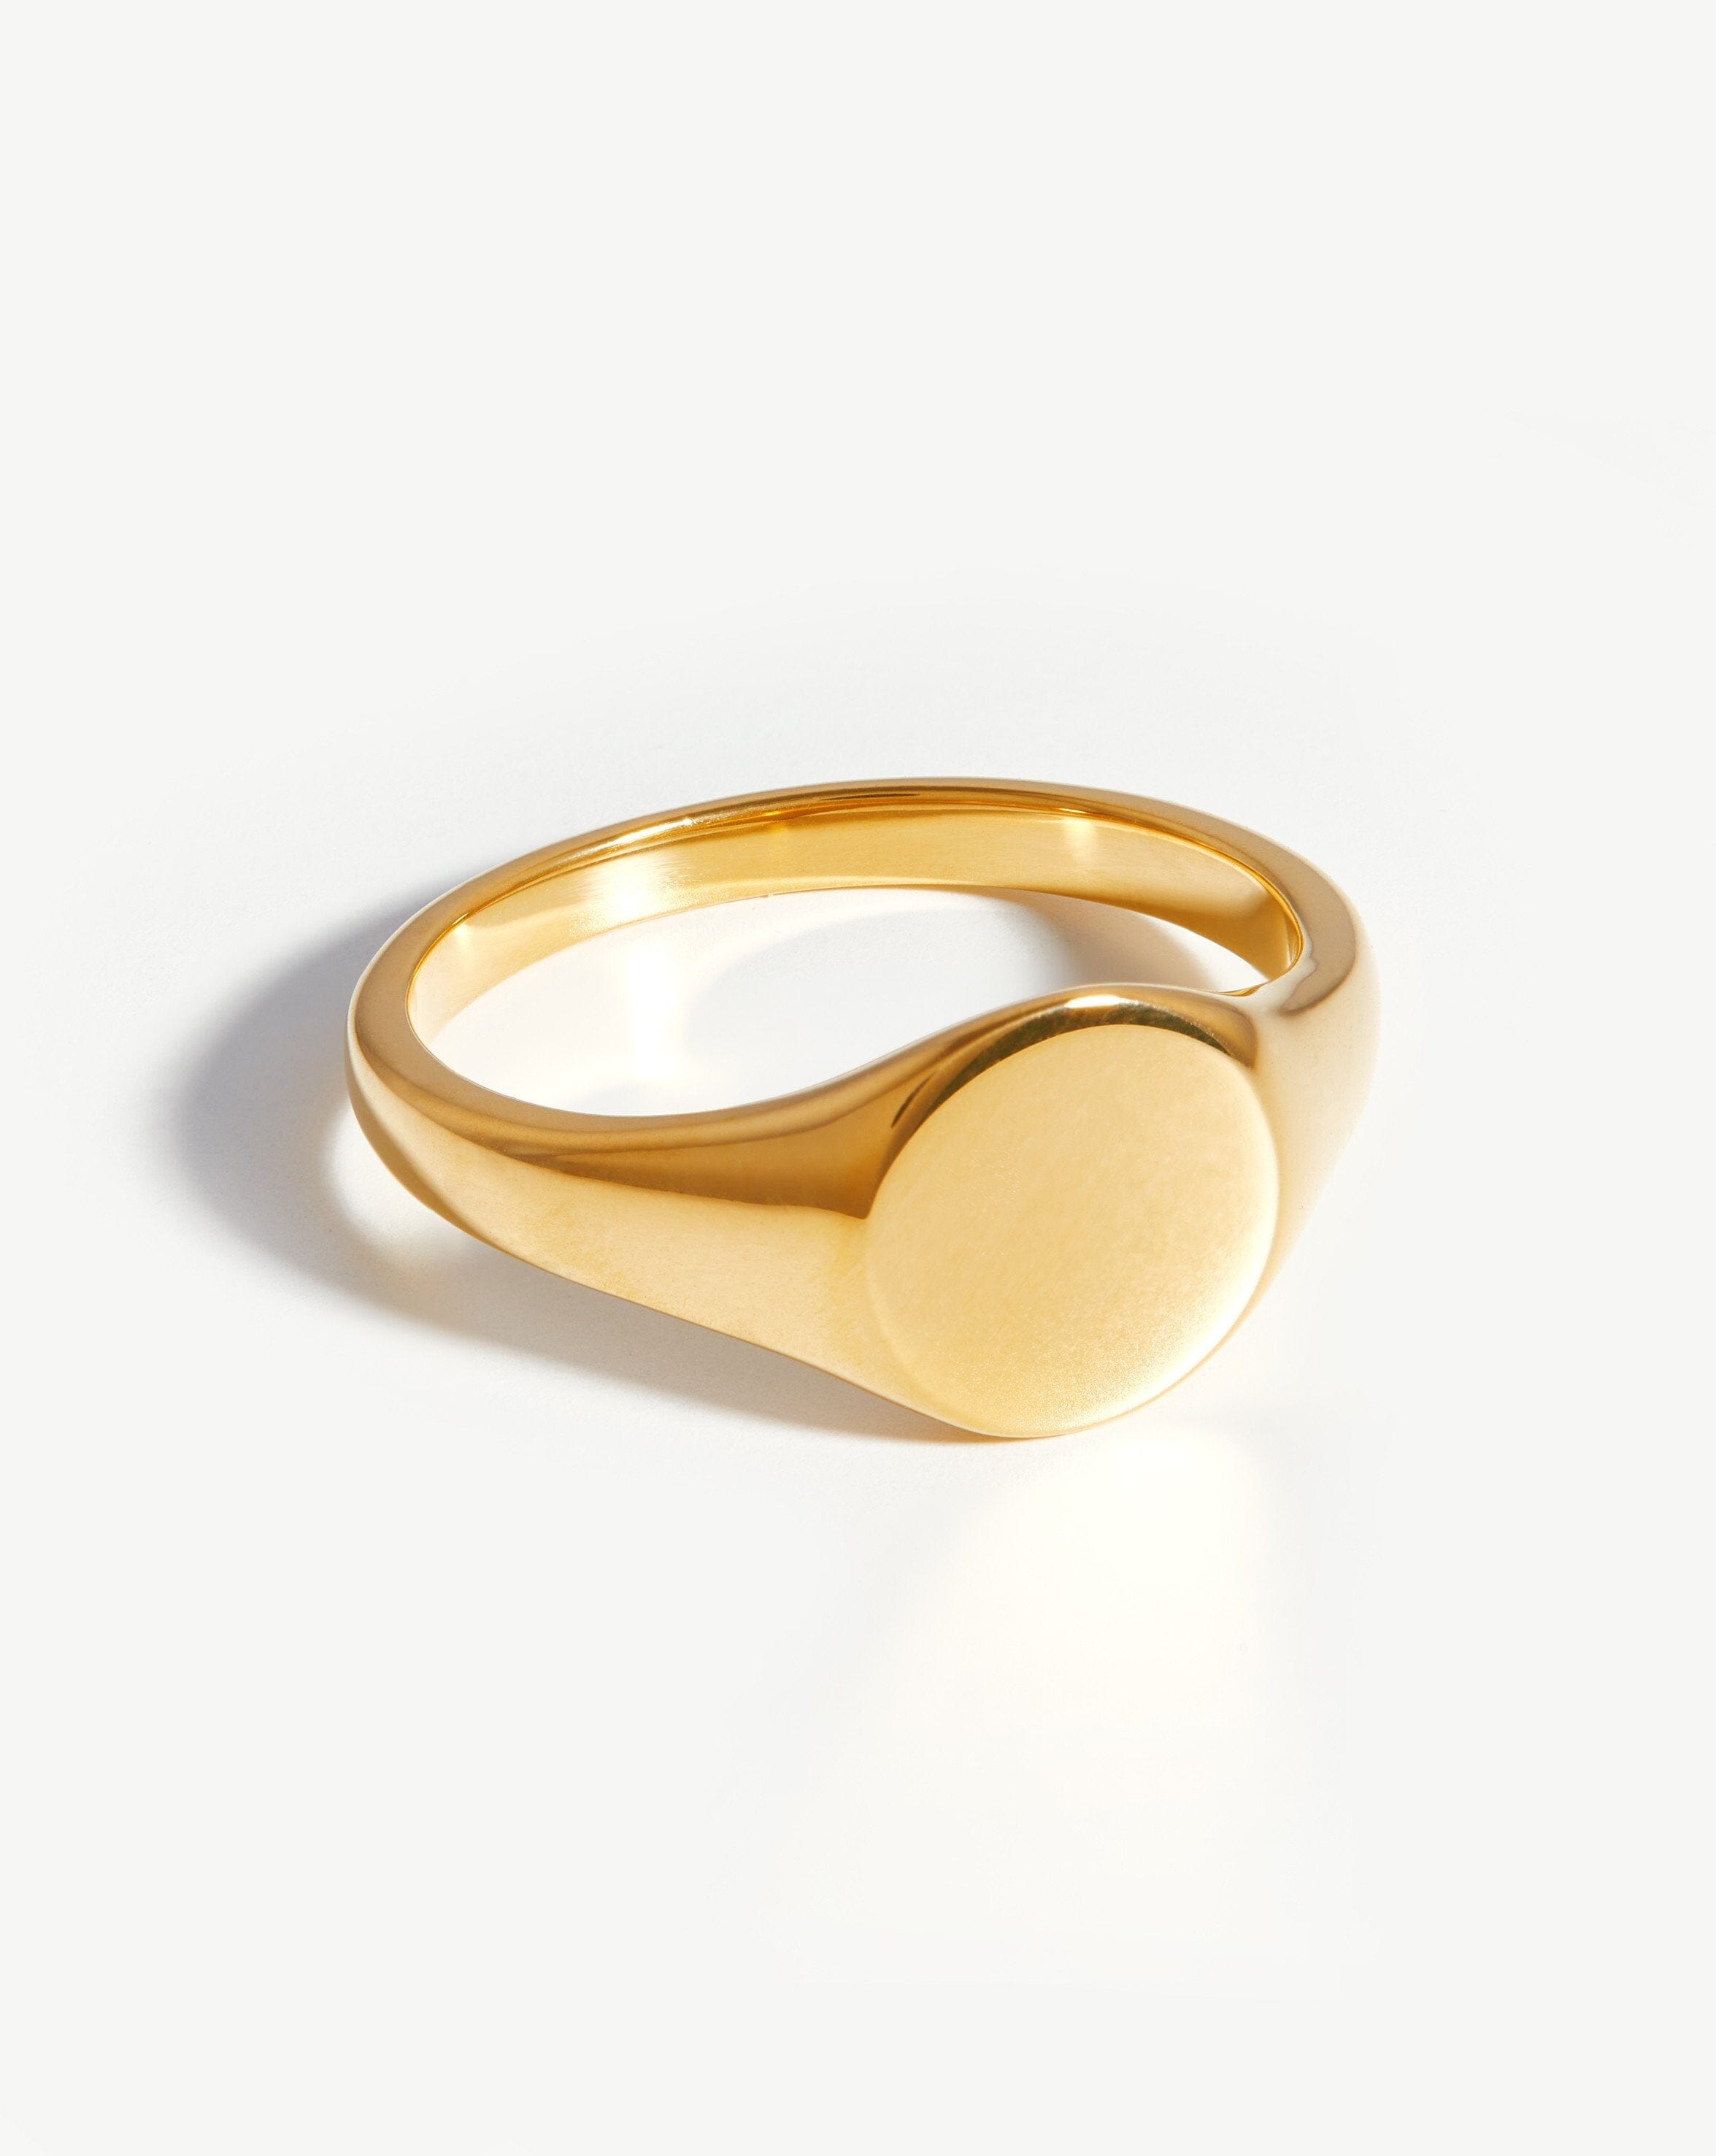 Signet Ring in Gold Plating with Engraved Monogram - MYKA